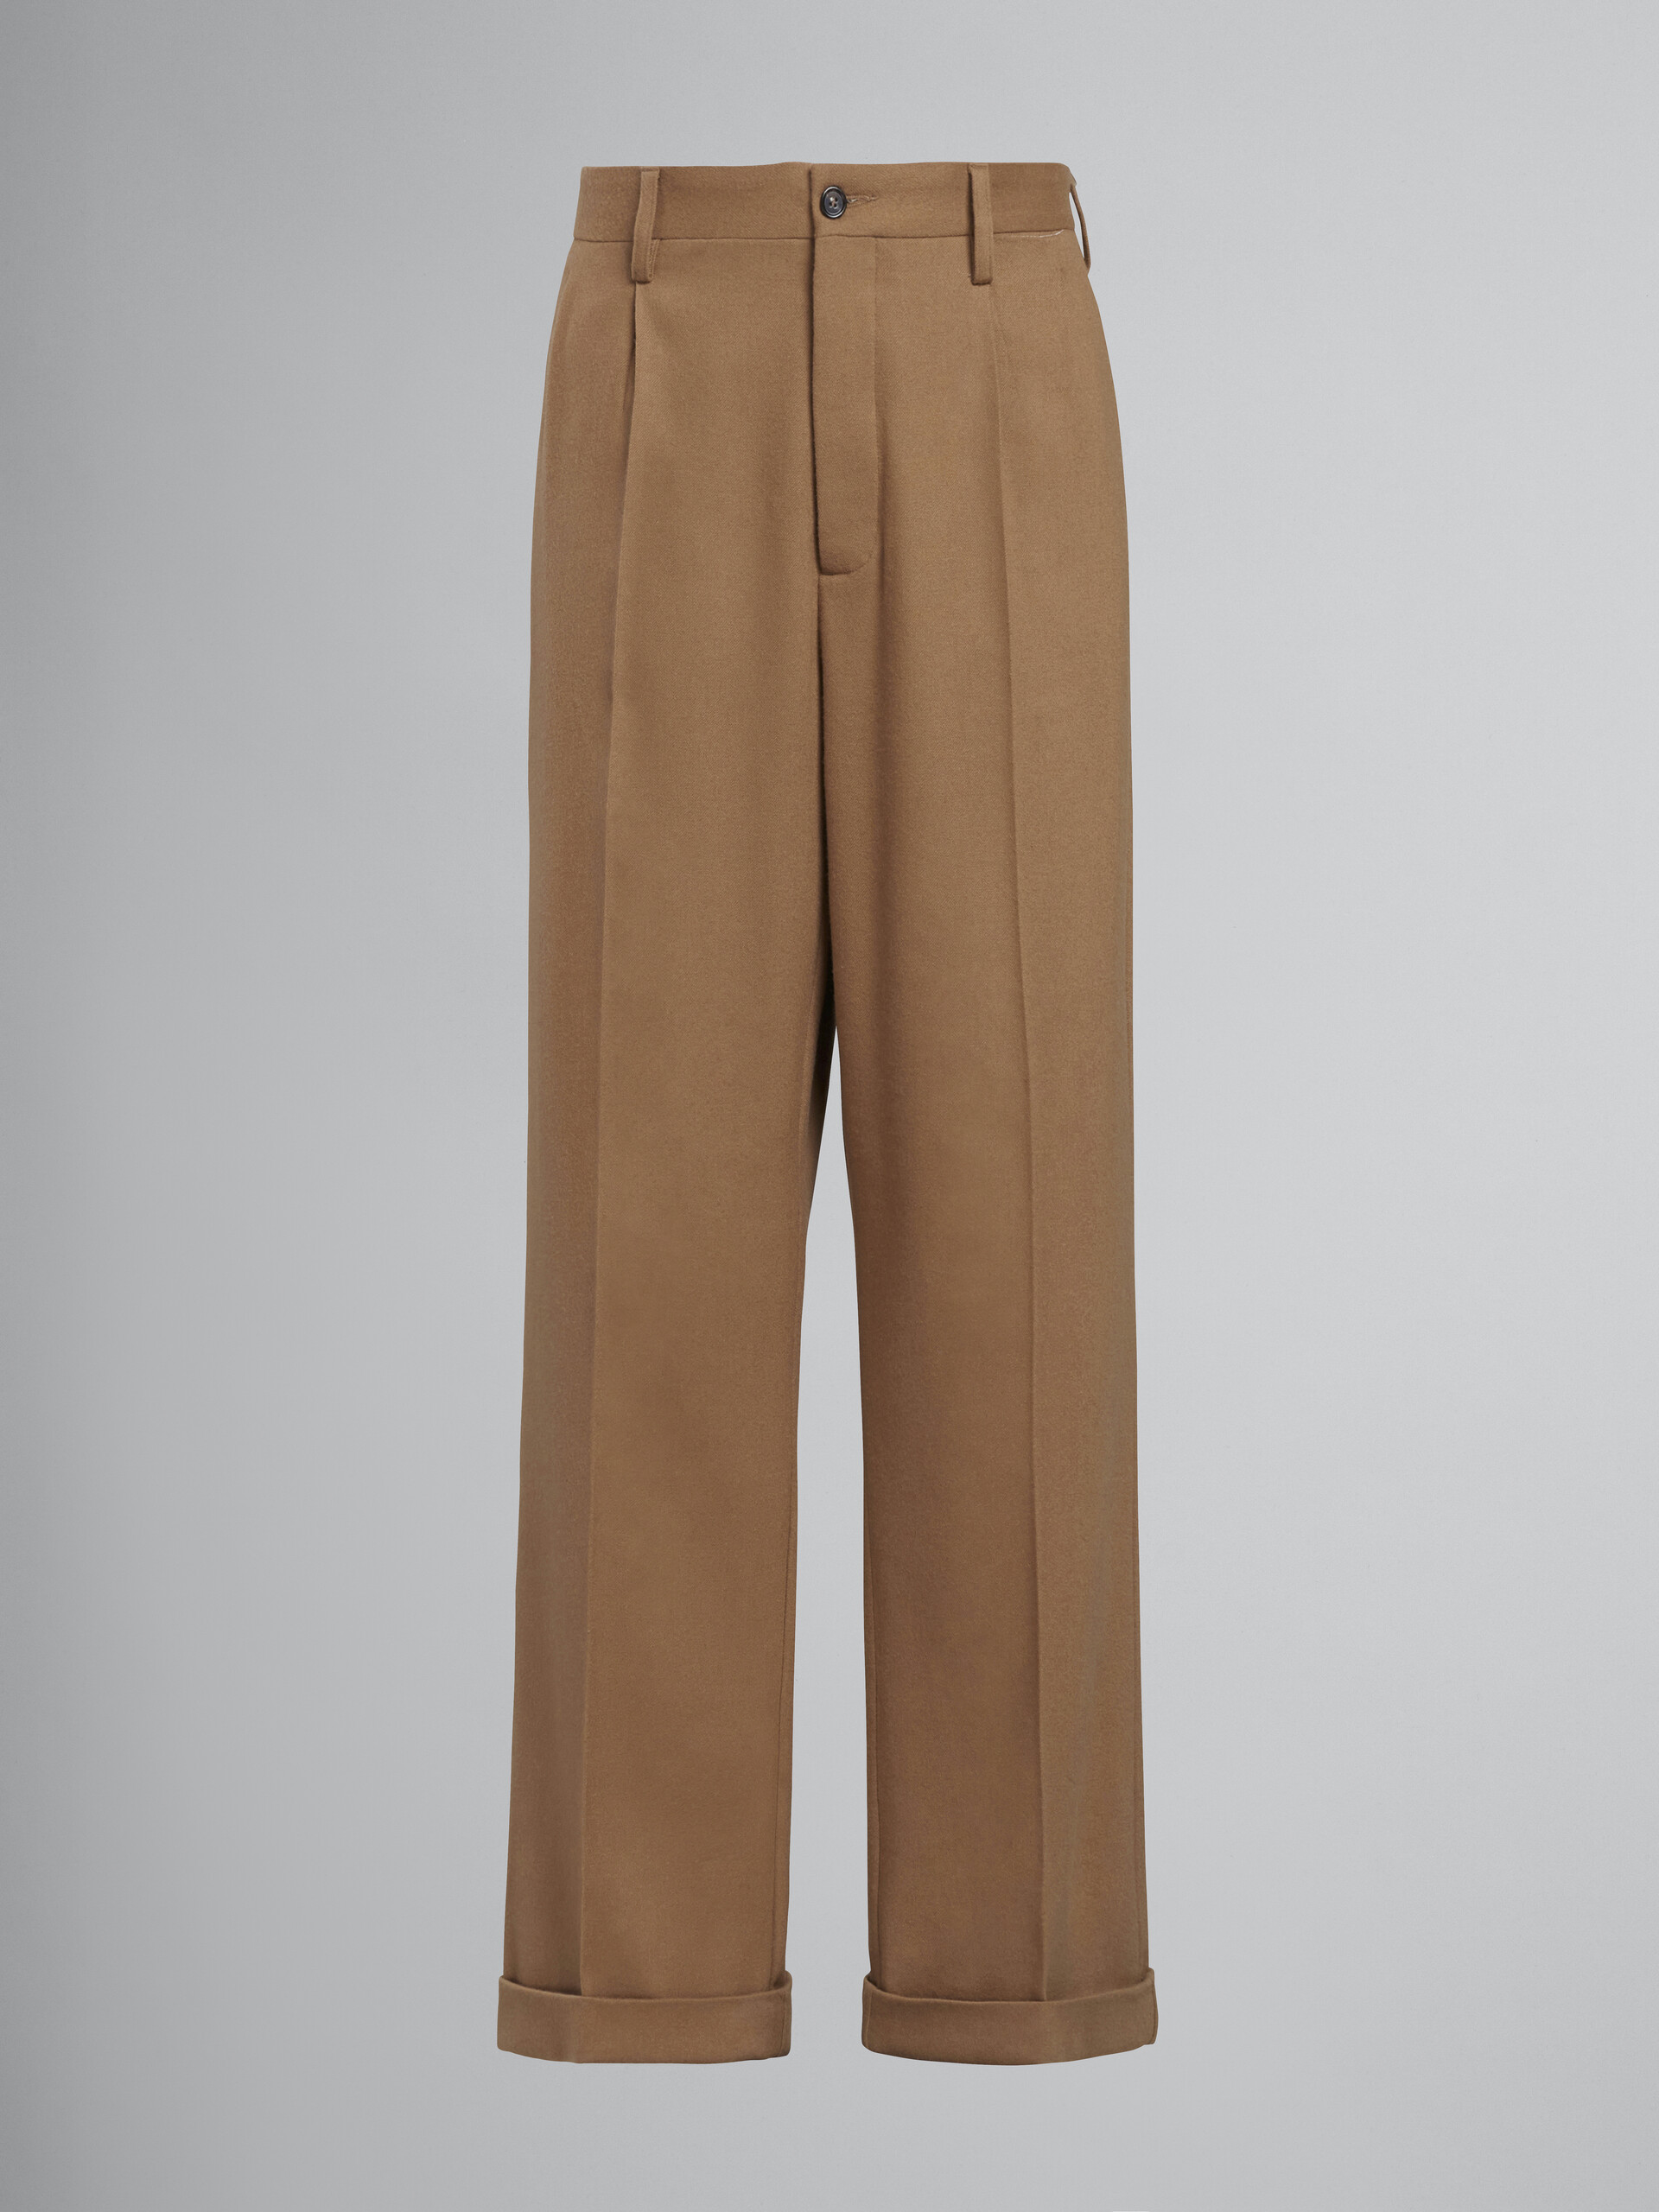 Beige tuxedo-style wool flannel pants - Pants - Image 1